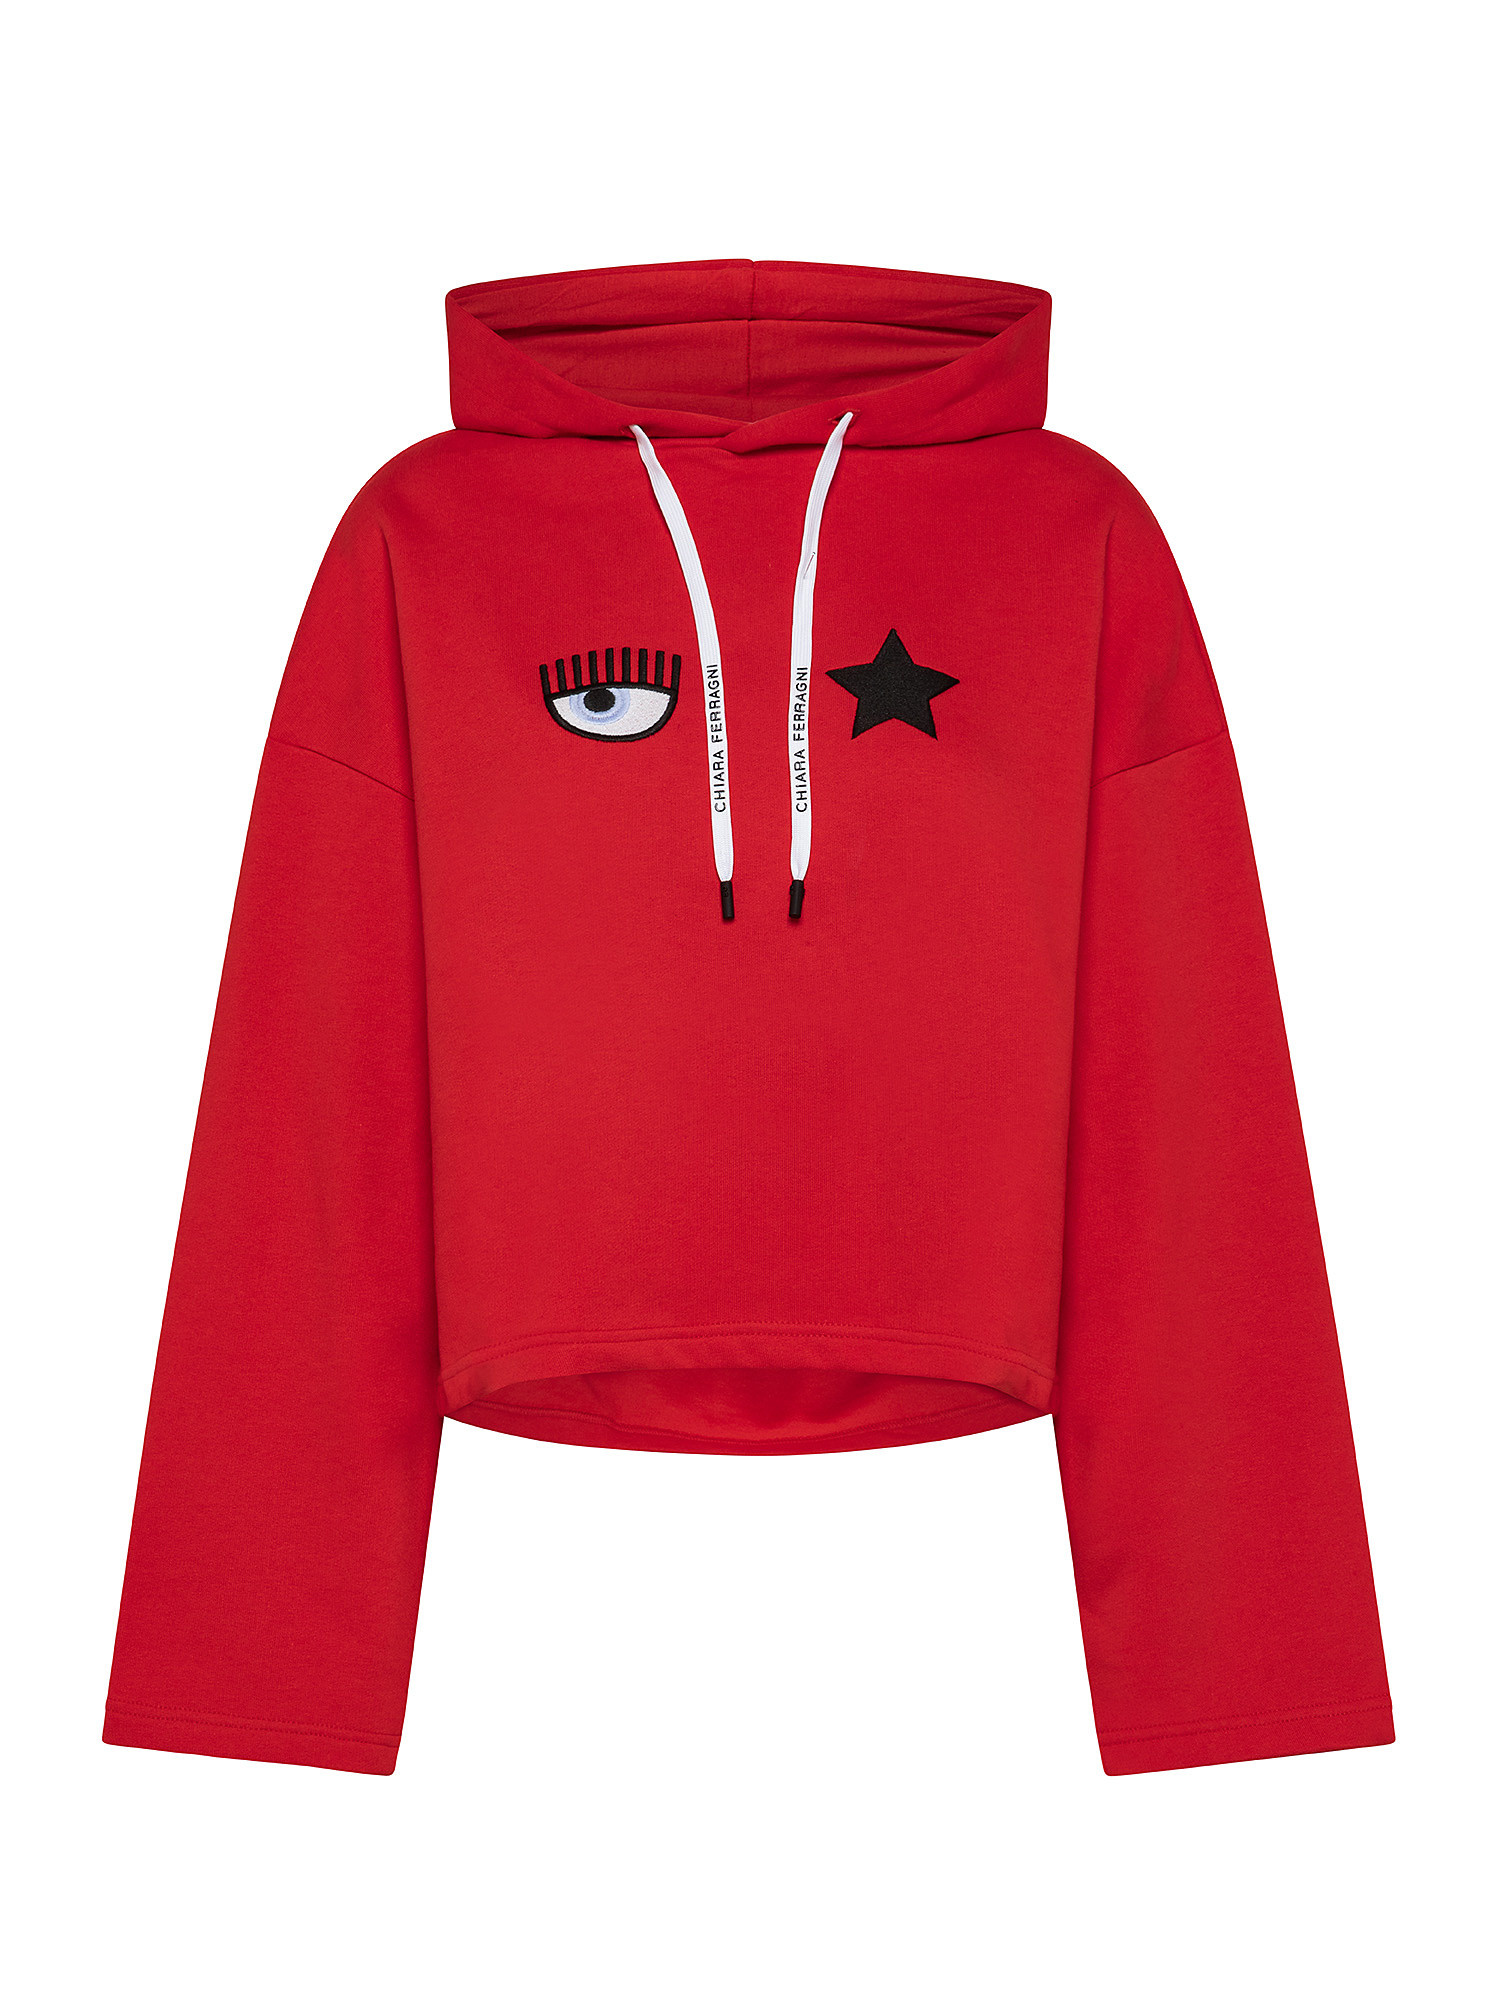 Eye Star sweatshirt, Brick Red, large image number 0